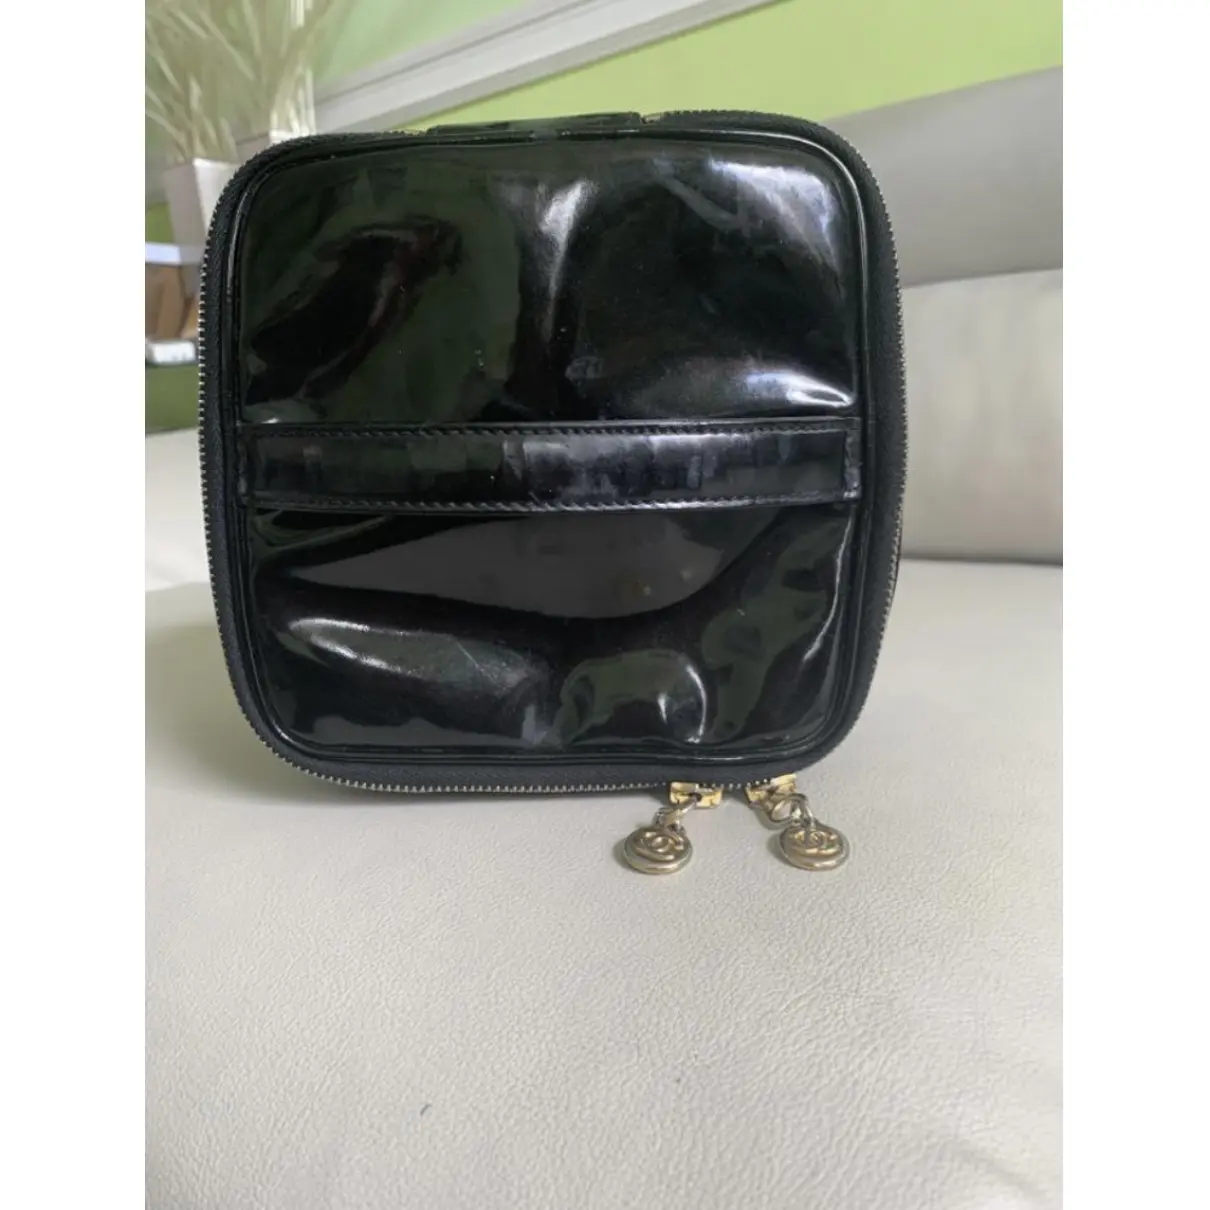 Leather satchel Chanel - Vintage